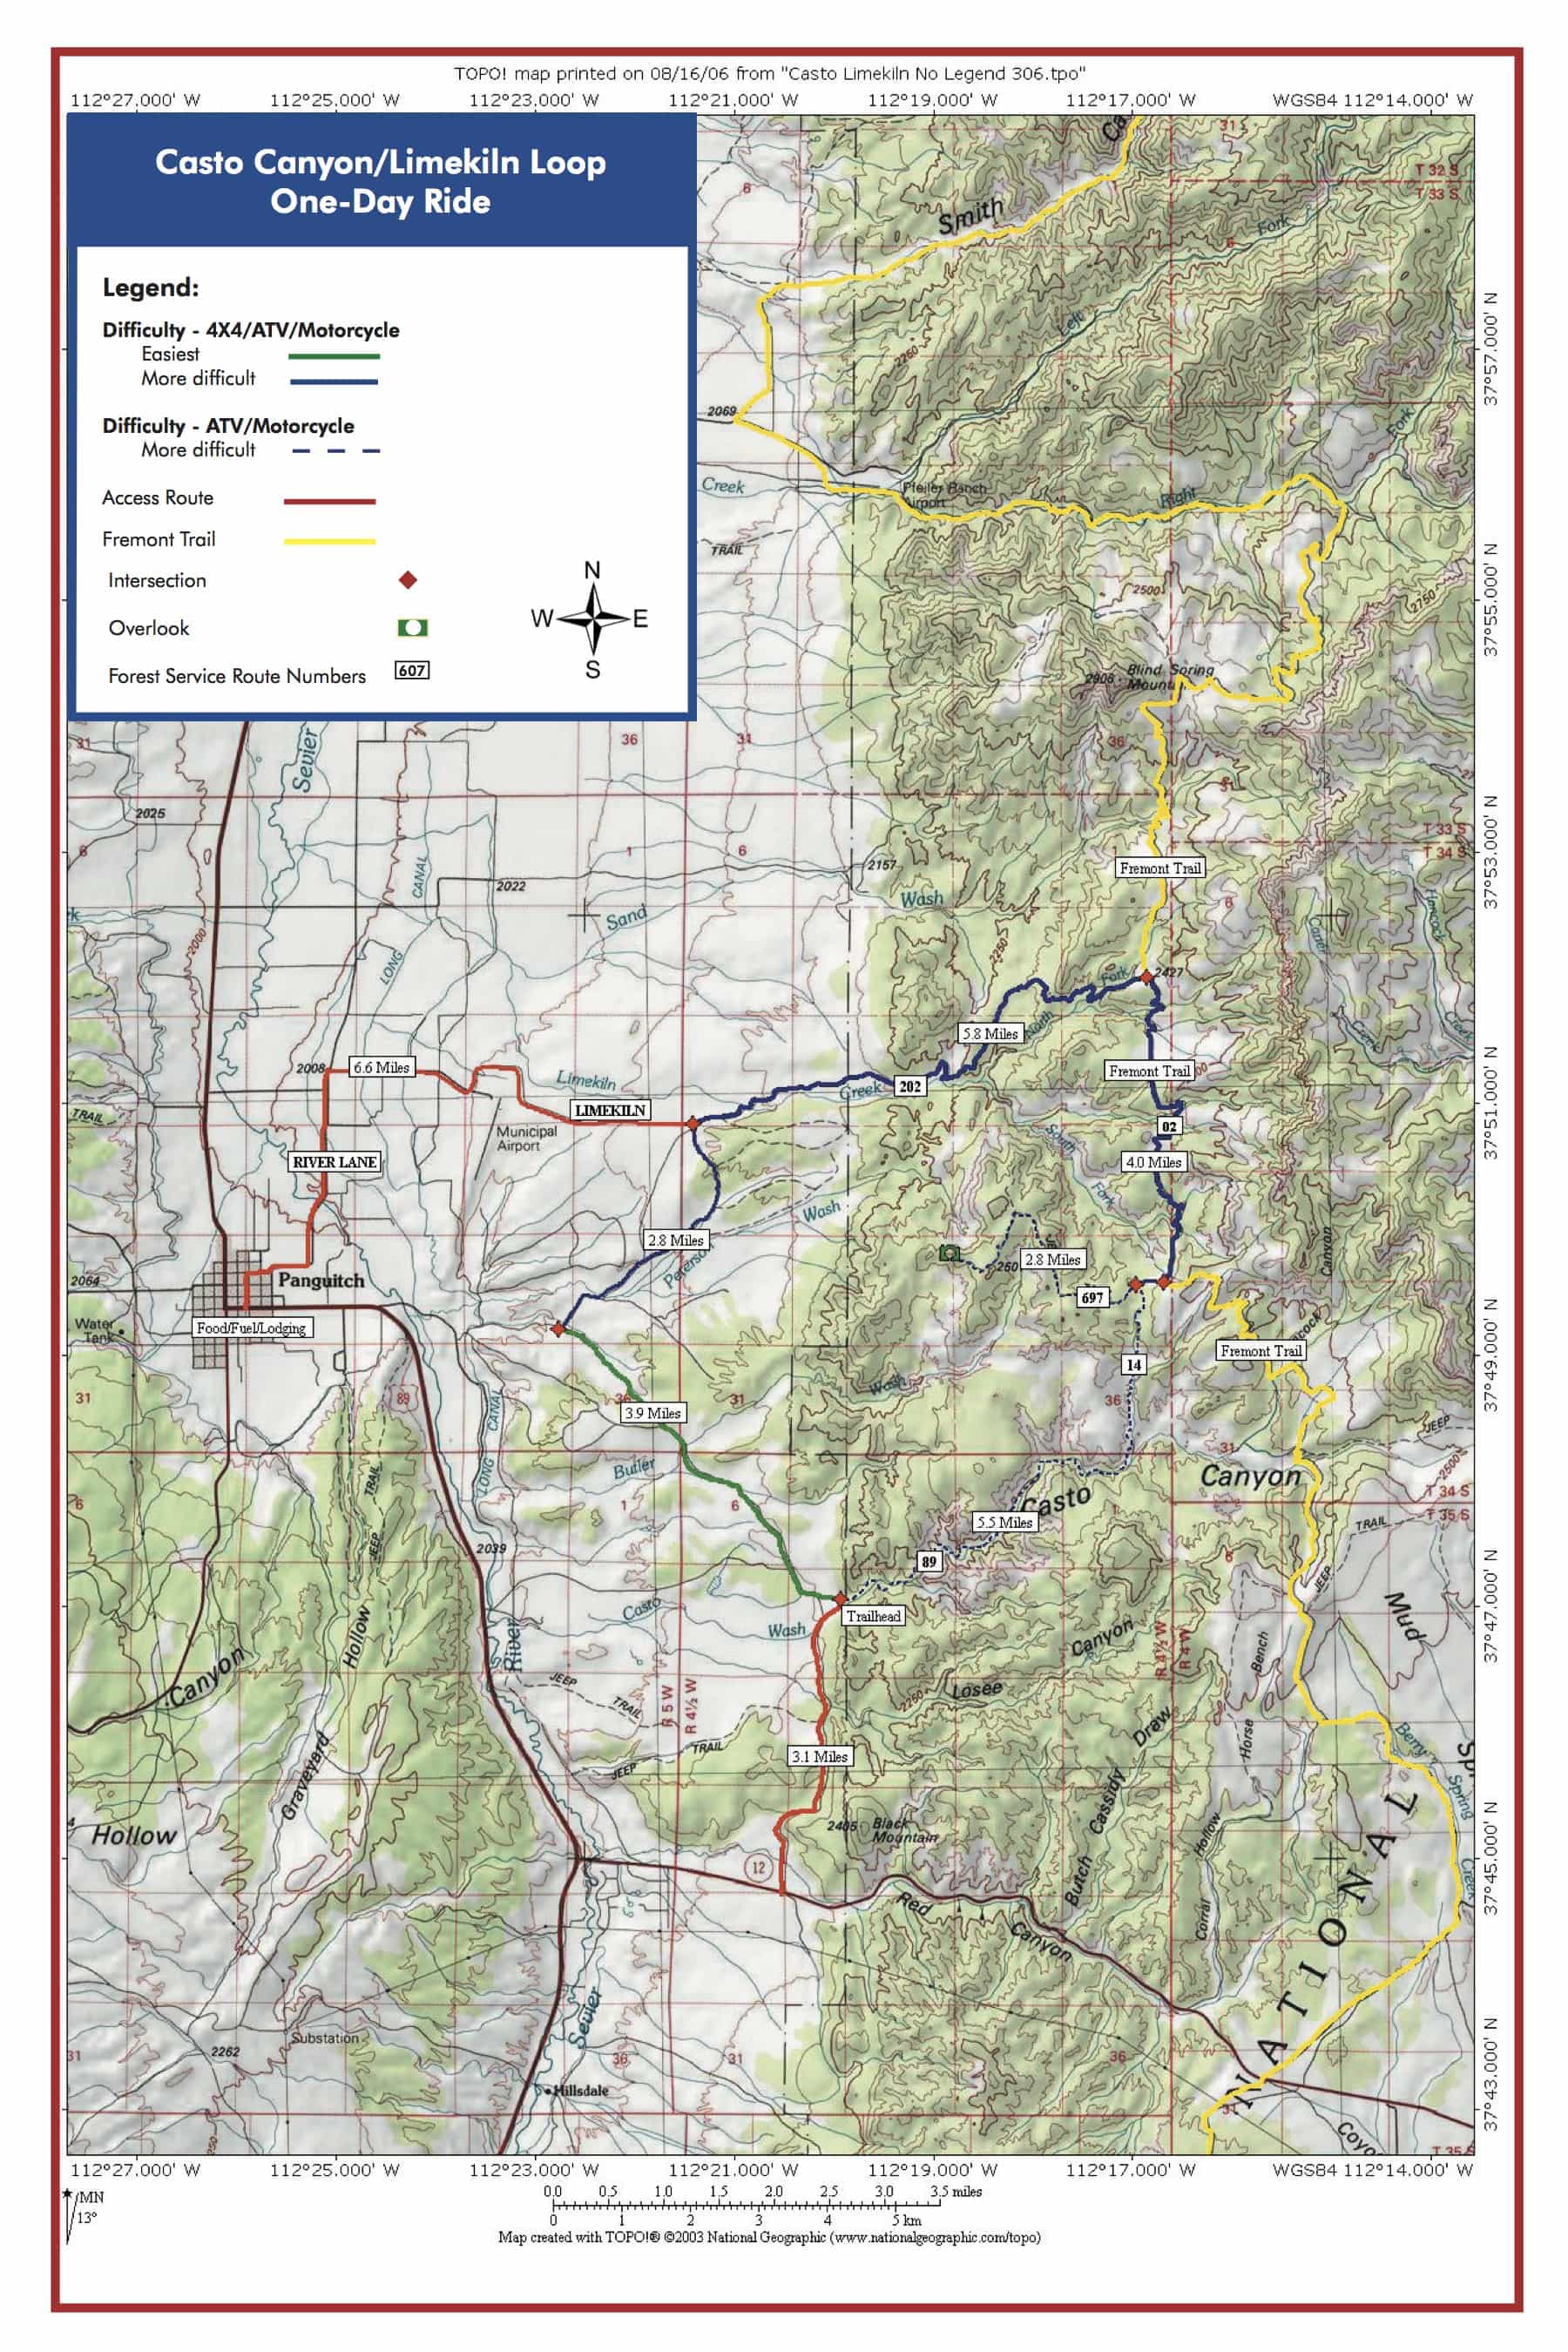 Casto Canyon / Limekiln Loop OHV trail map